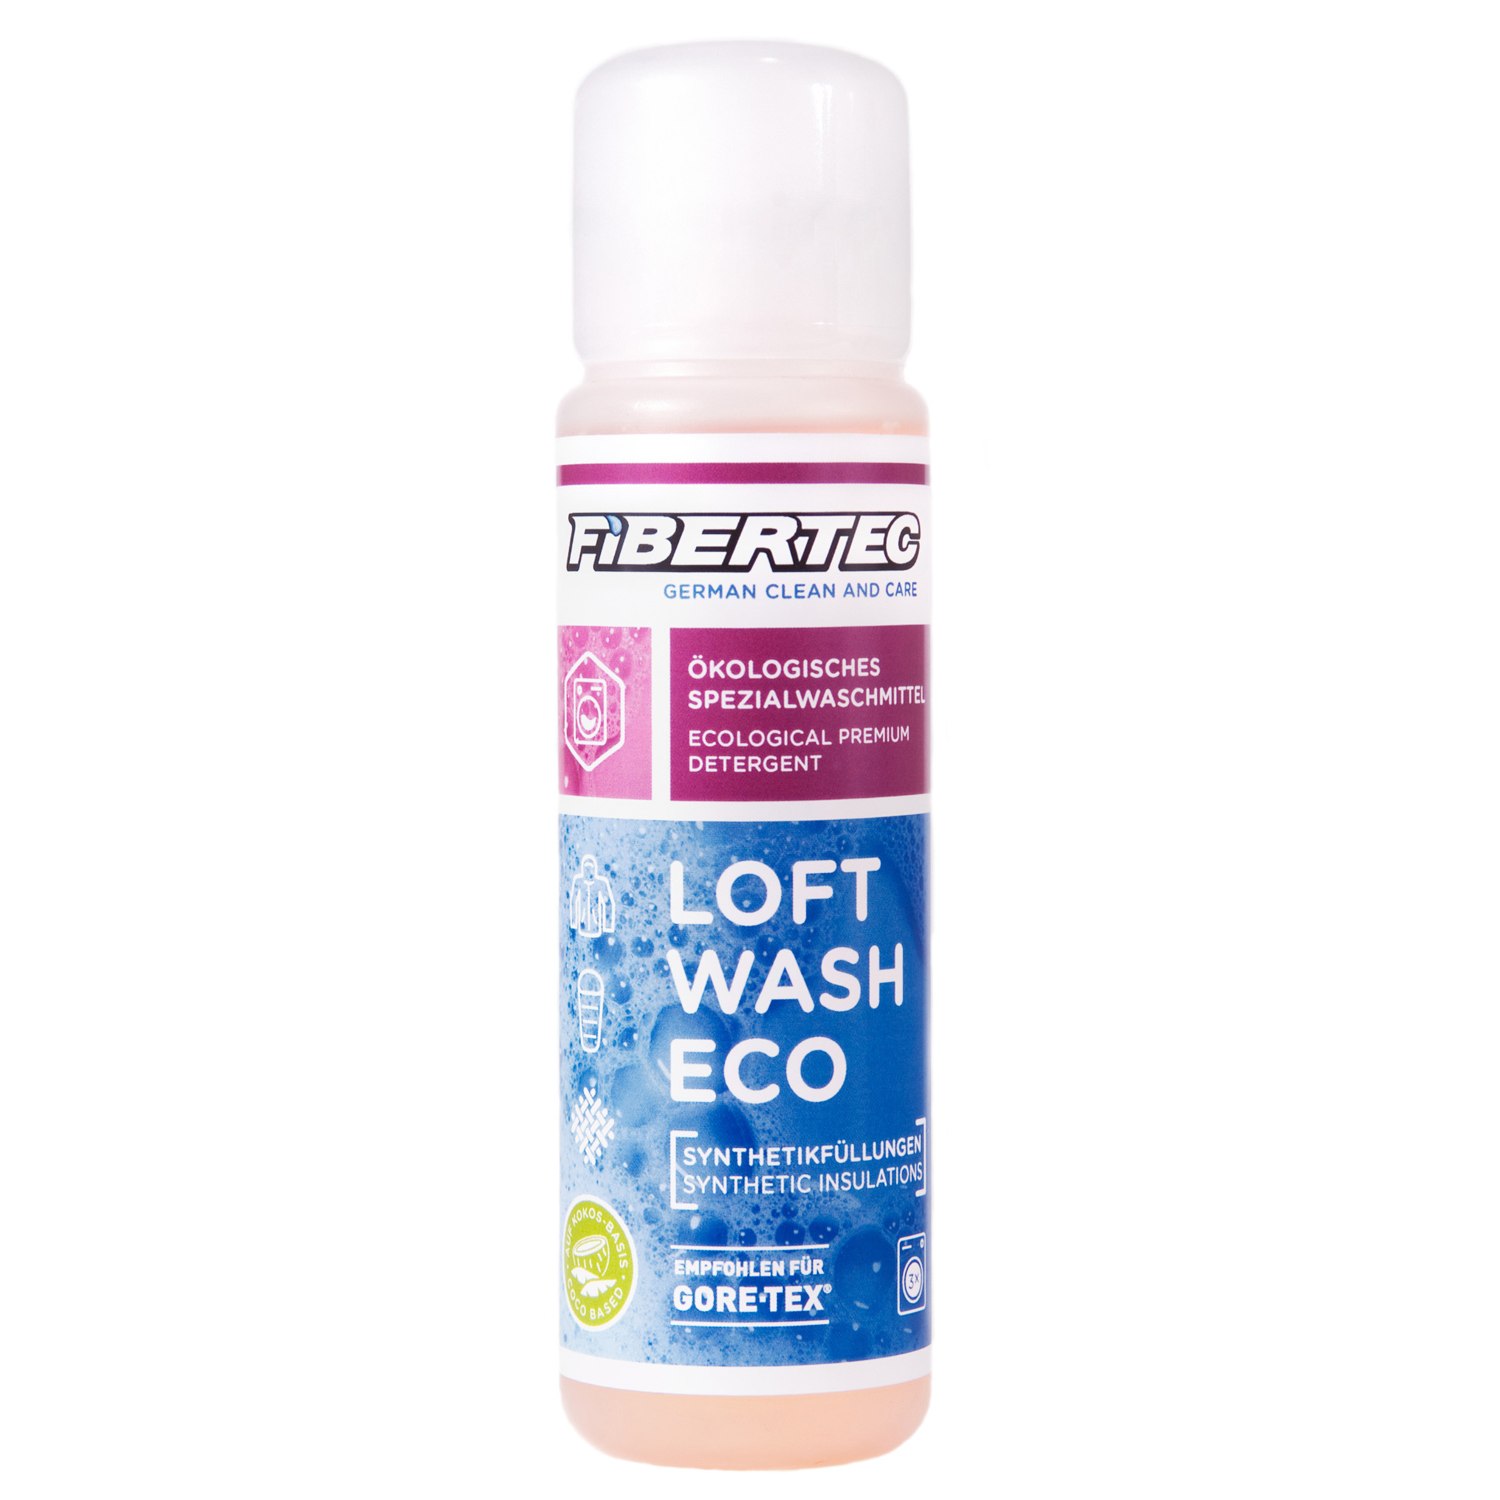 Productfoto van Fibertec Loft Wash Eco Detergent for synthetic fillings 100 ml